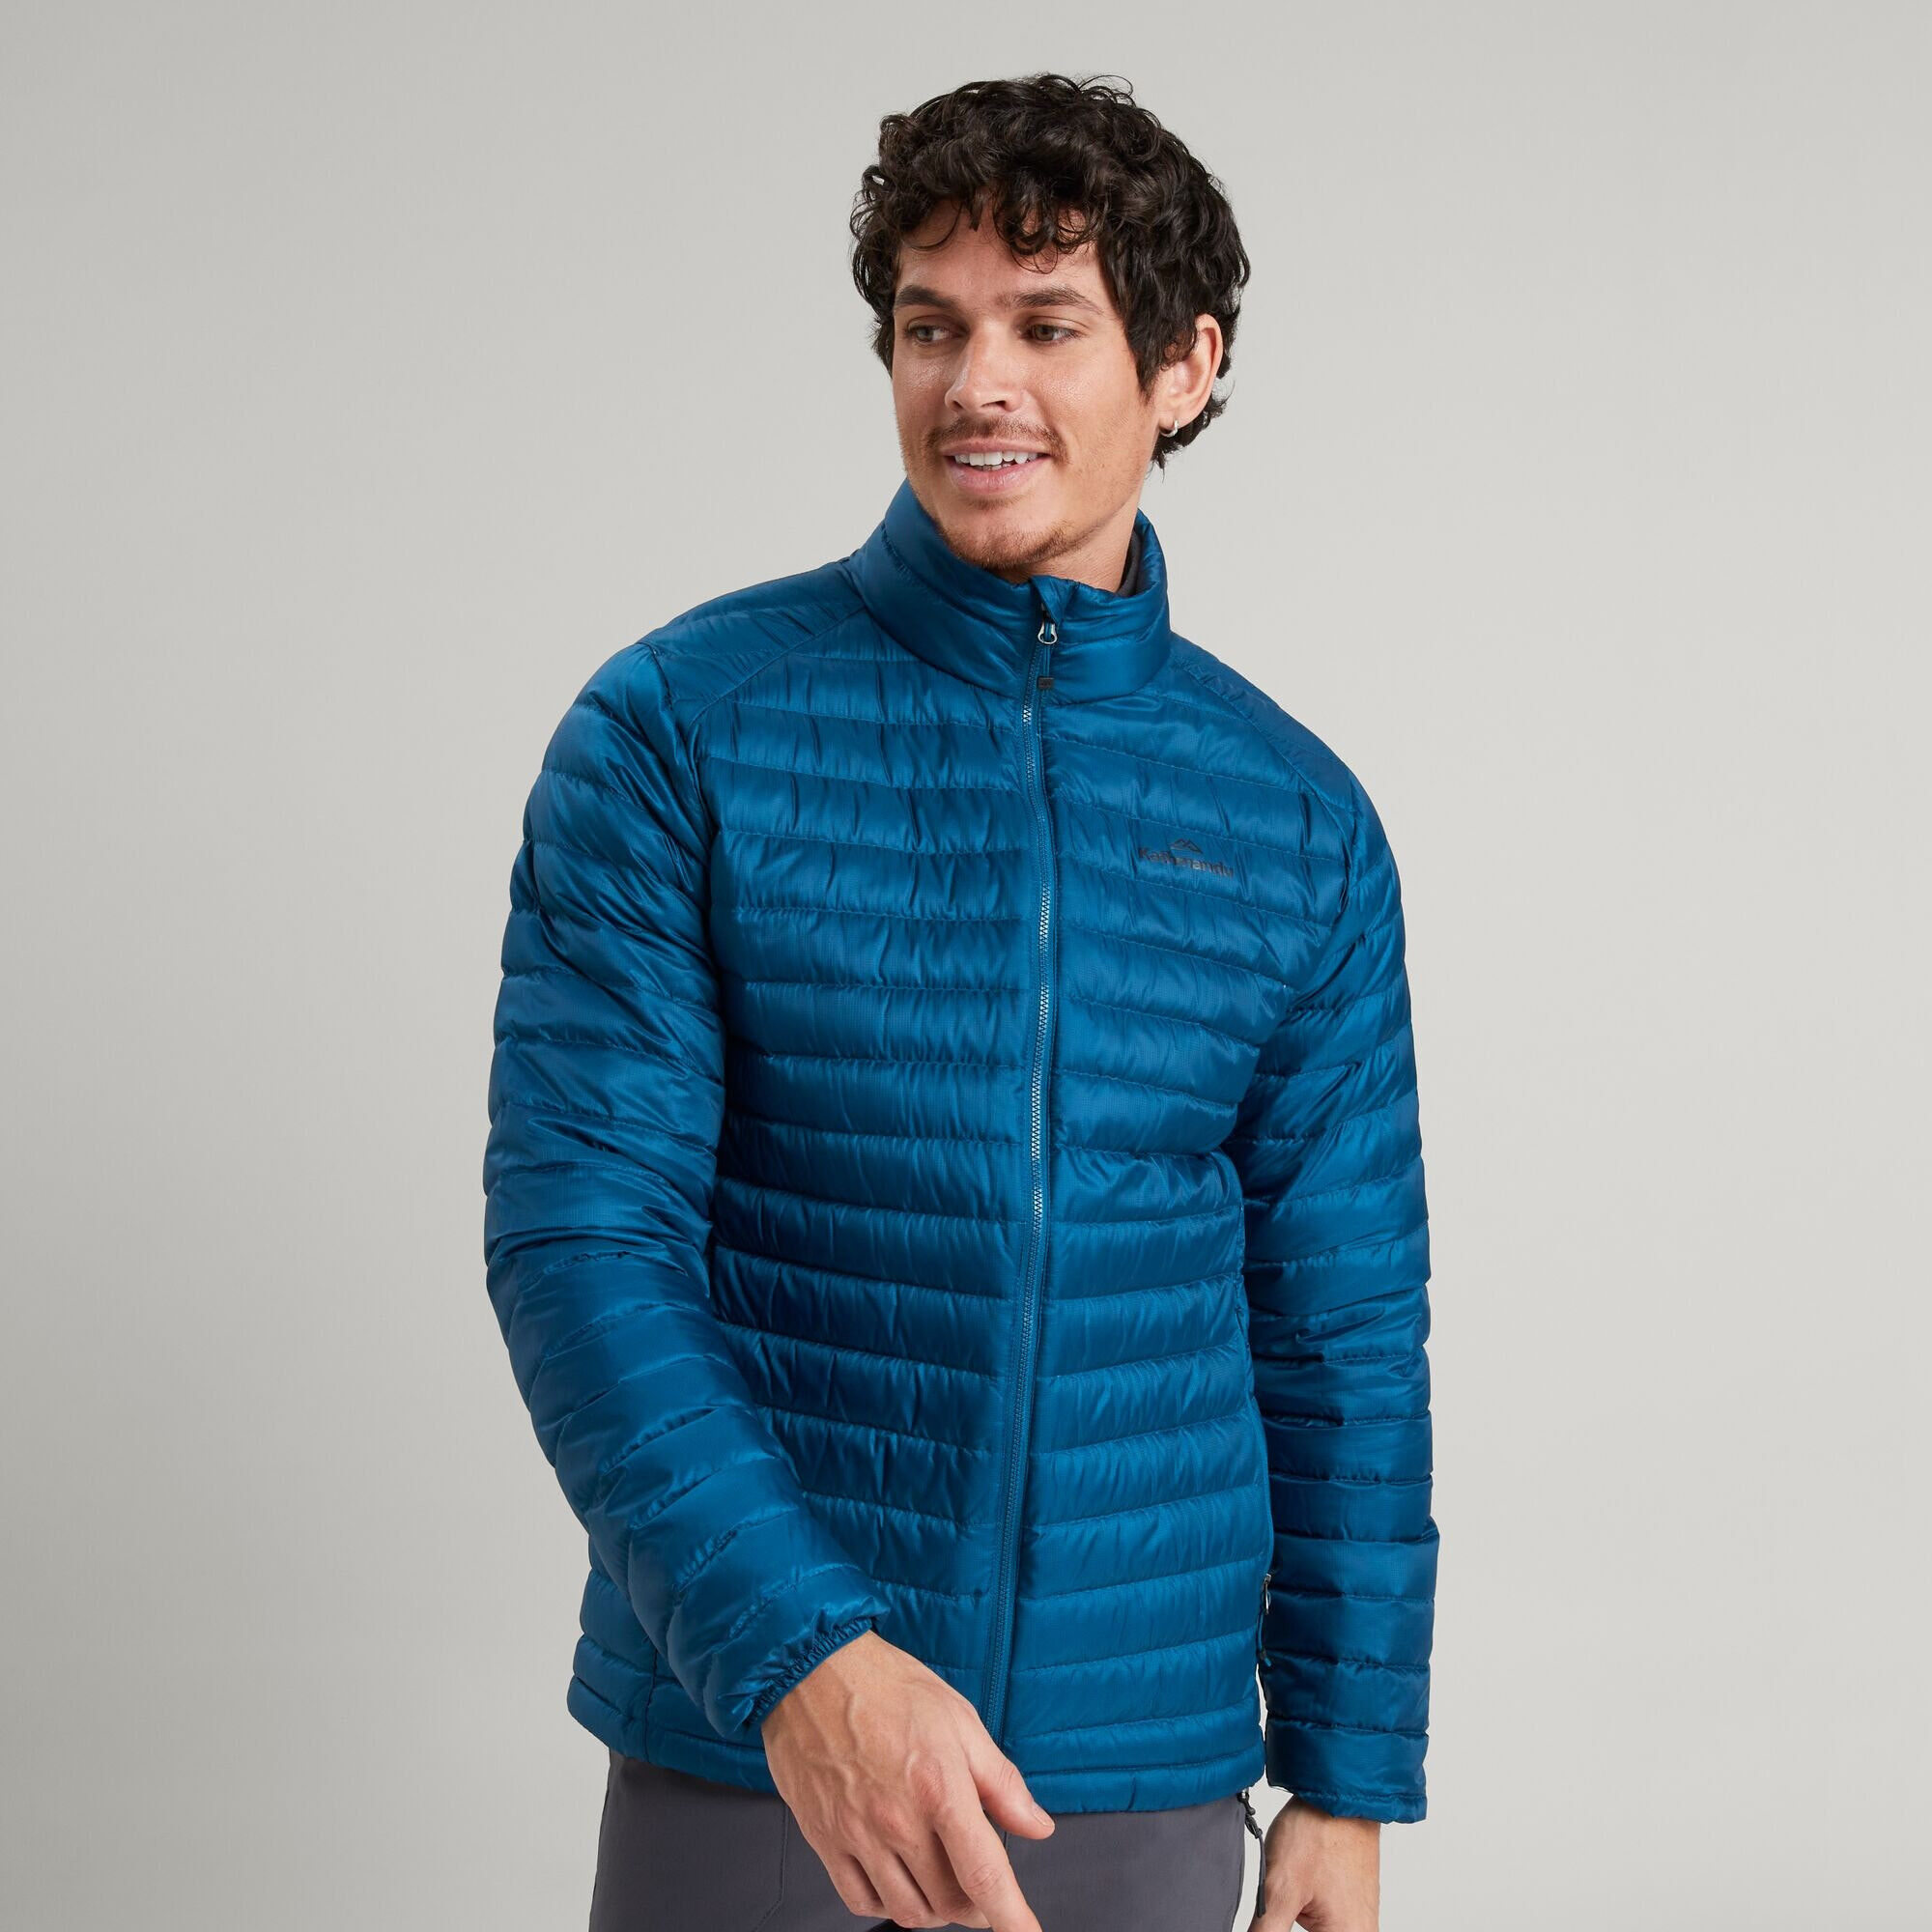 Patagonia Downdrift Jacket - Thoughts? Should I buy? : r